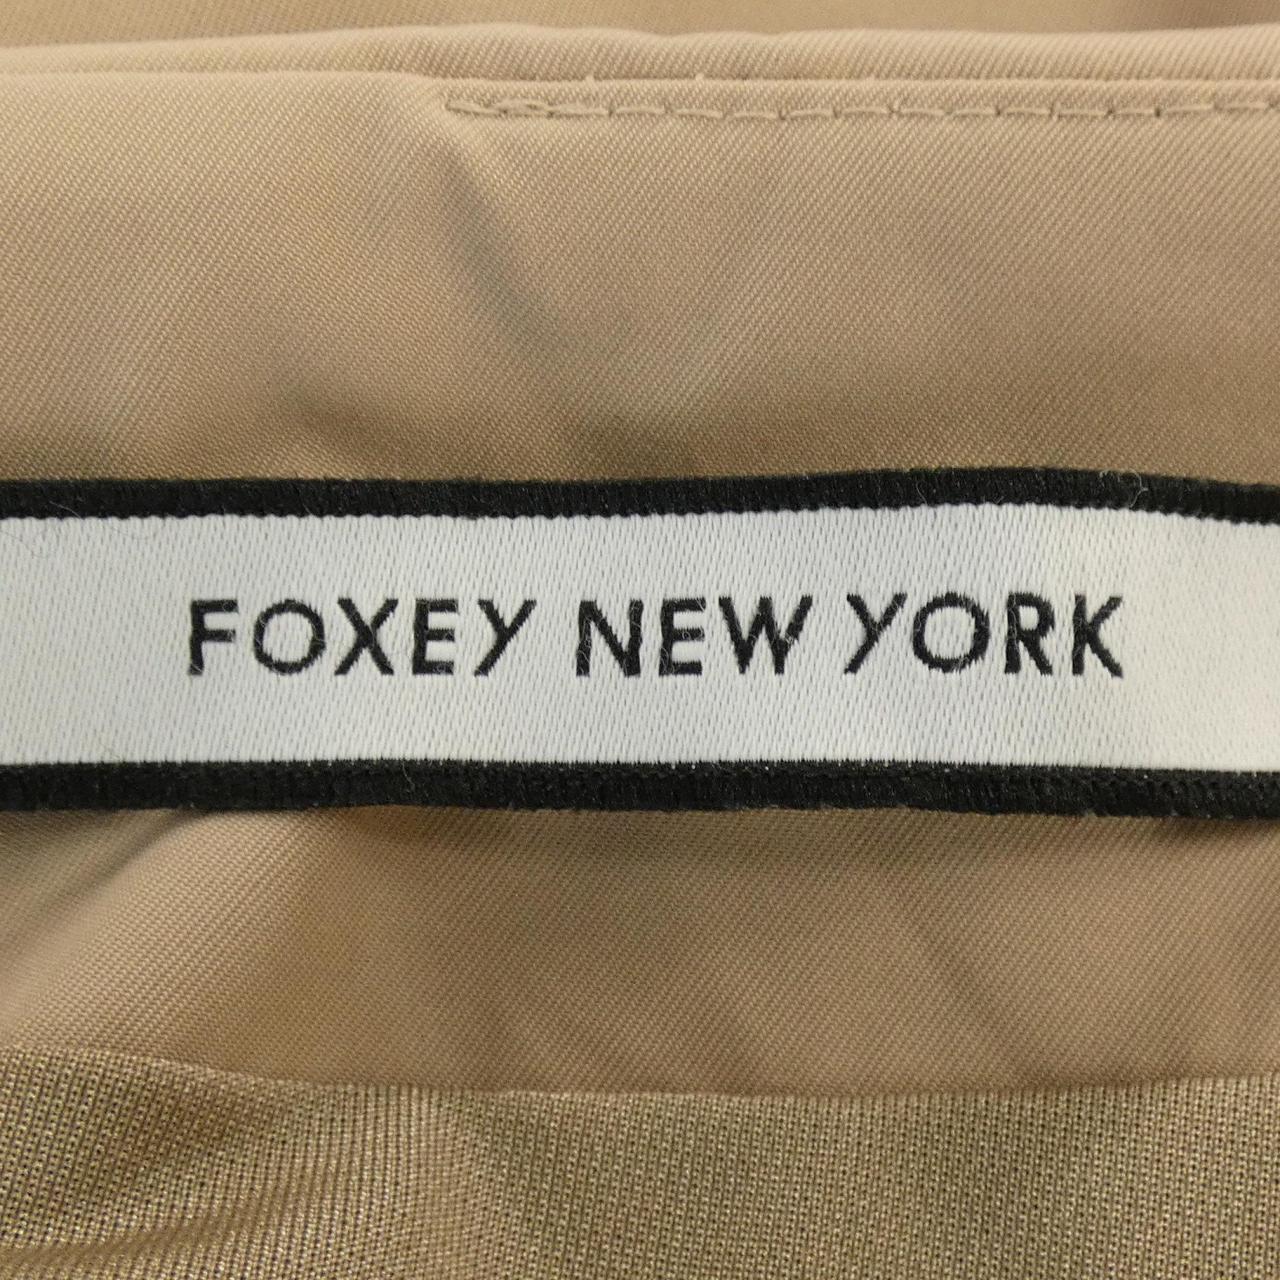 Foxy New York FOXEY NEW YORK skirt